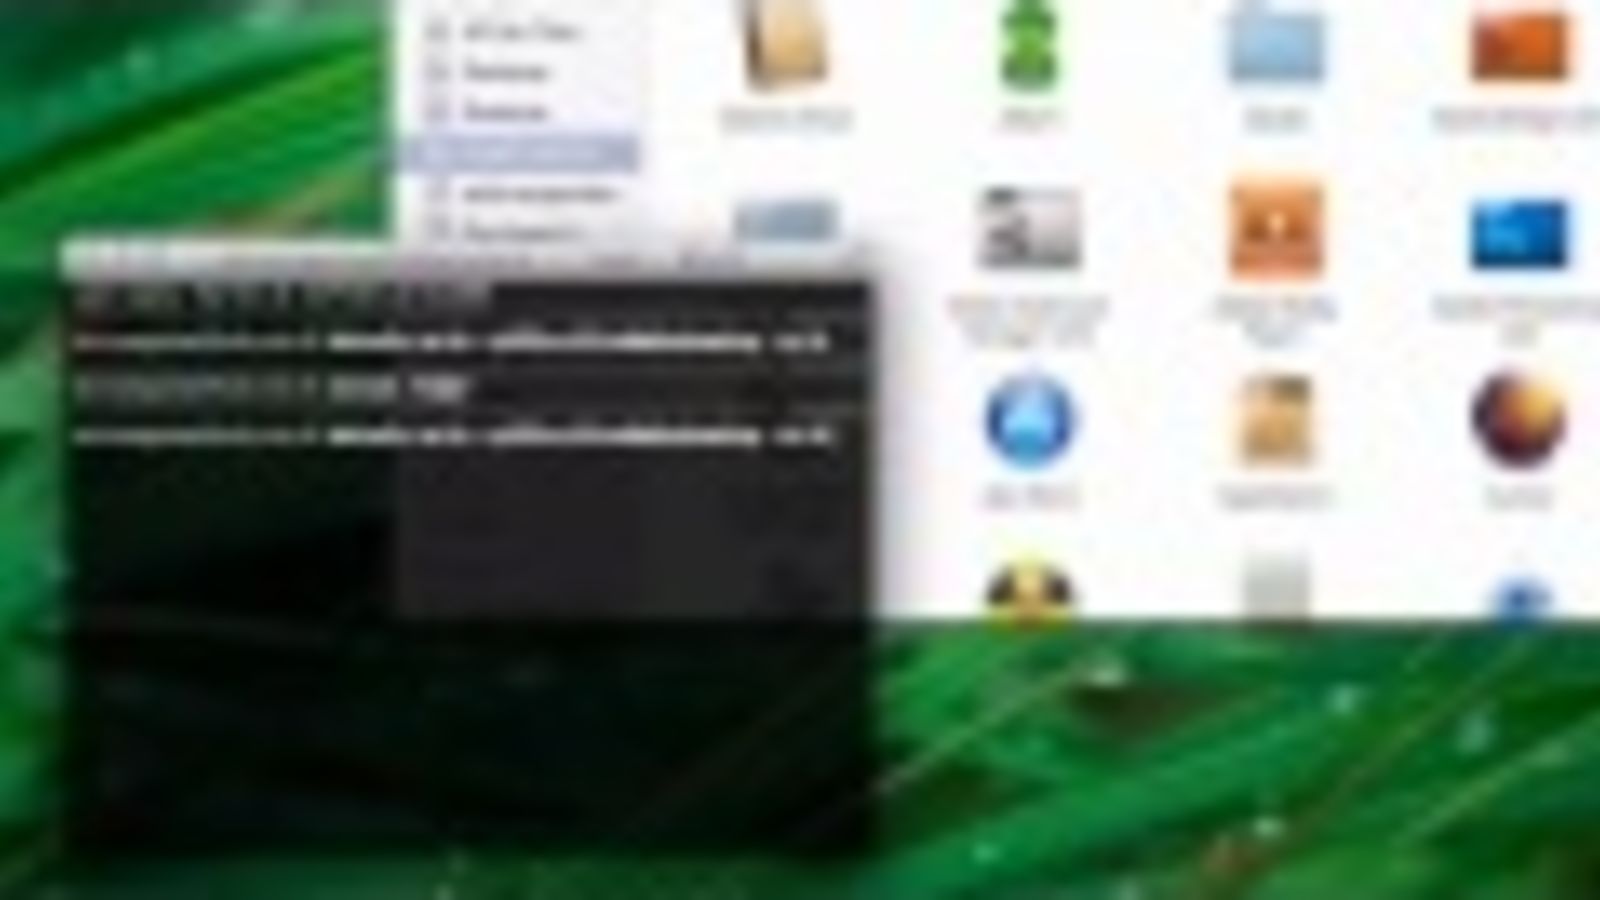 windows 7 on macbook late 2008